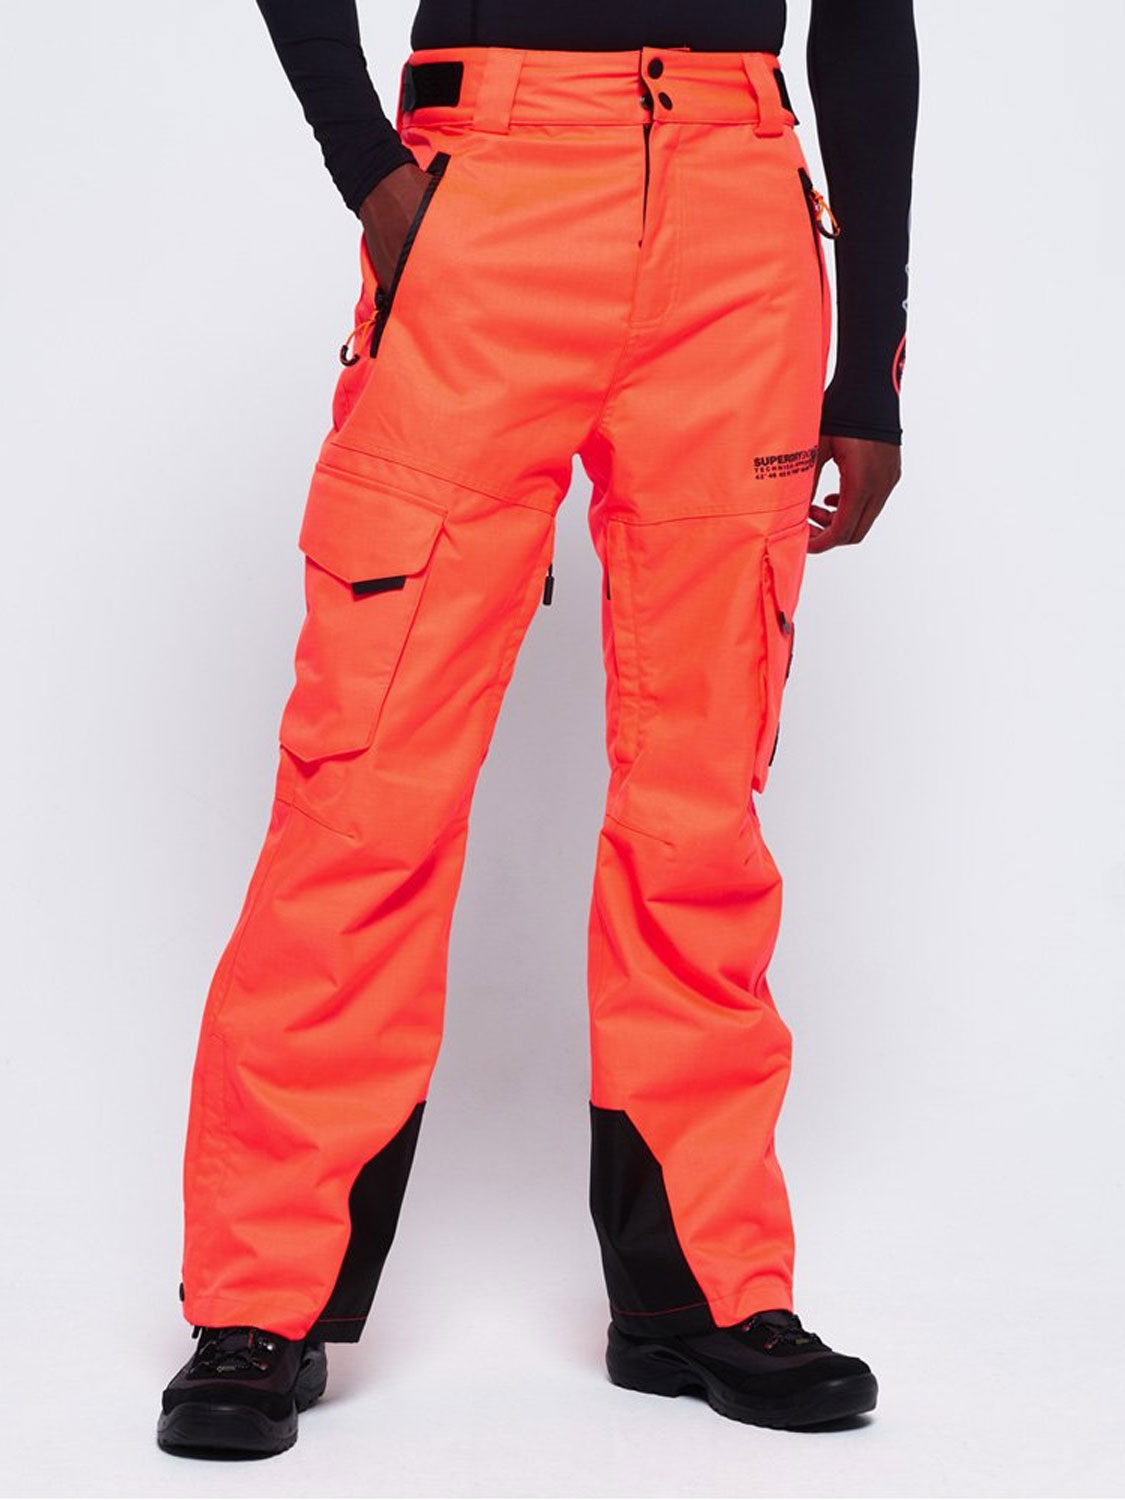 Superdry Mens Snow Pant Orange - Size: Large